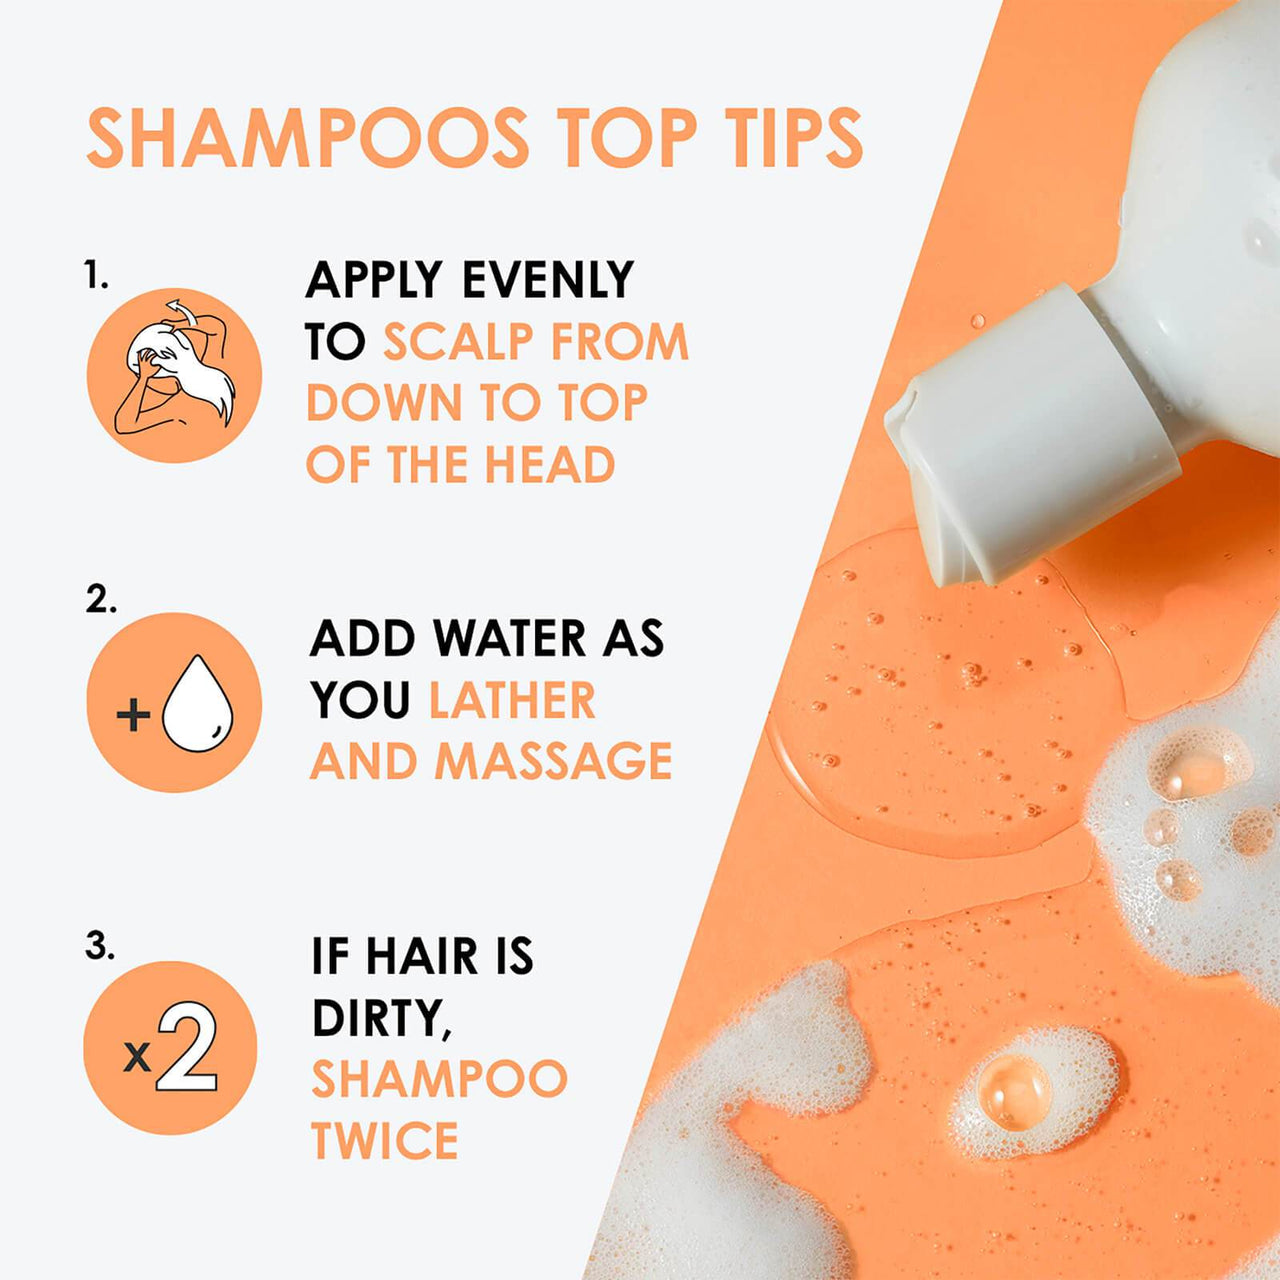 weDo/ Professional Light and Soft Shampoo Tips